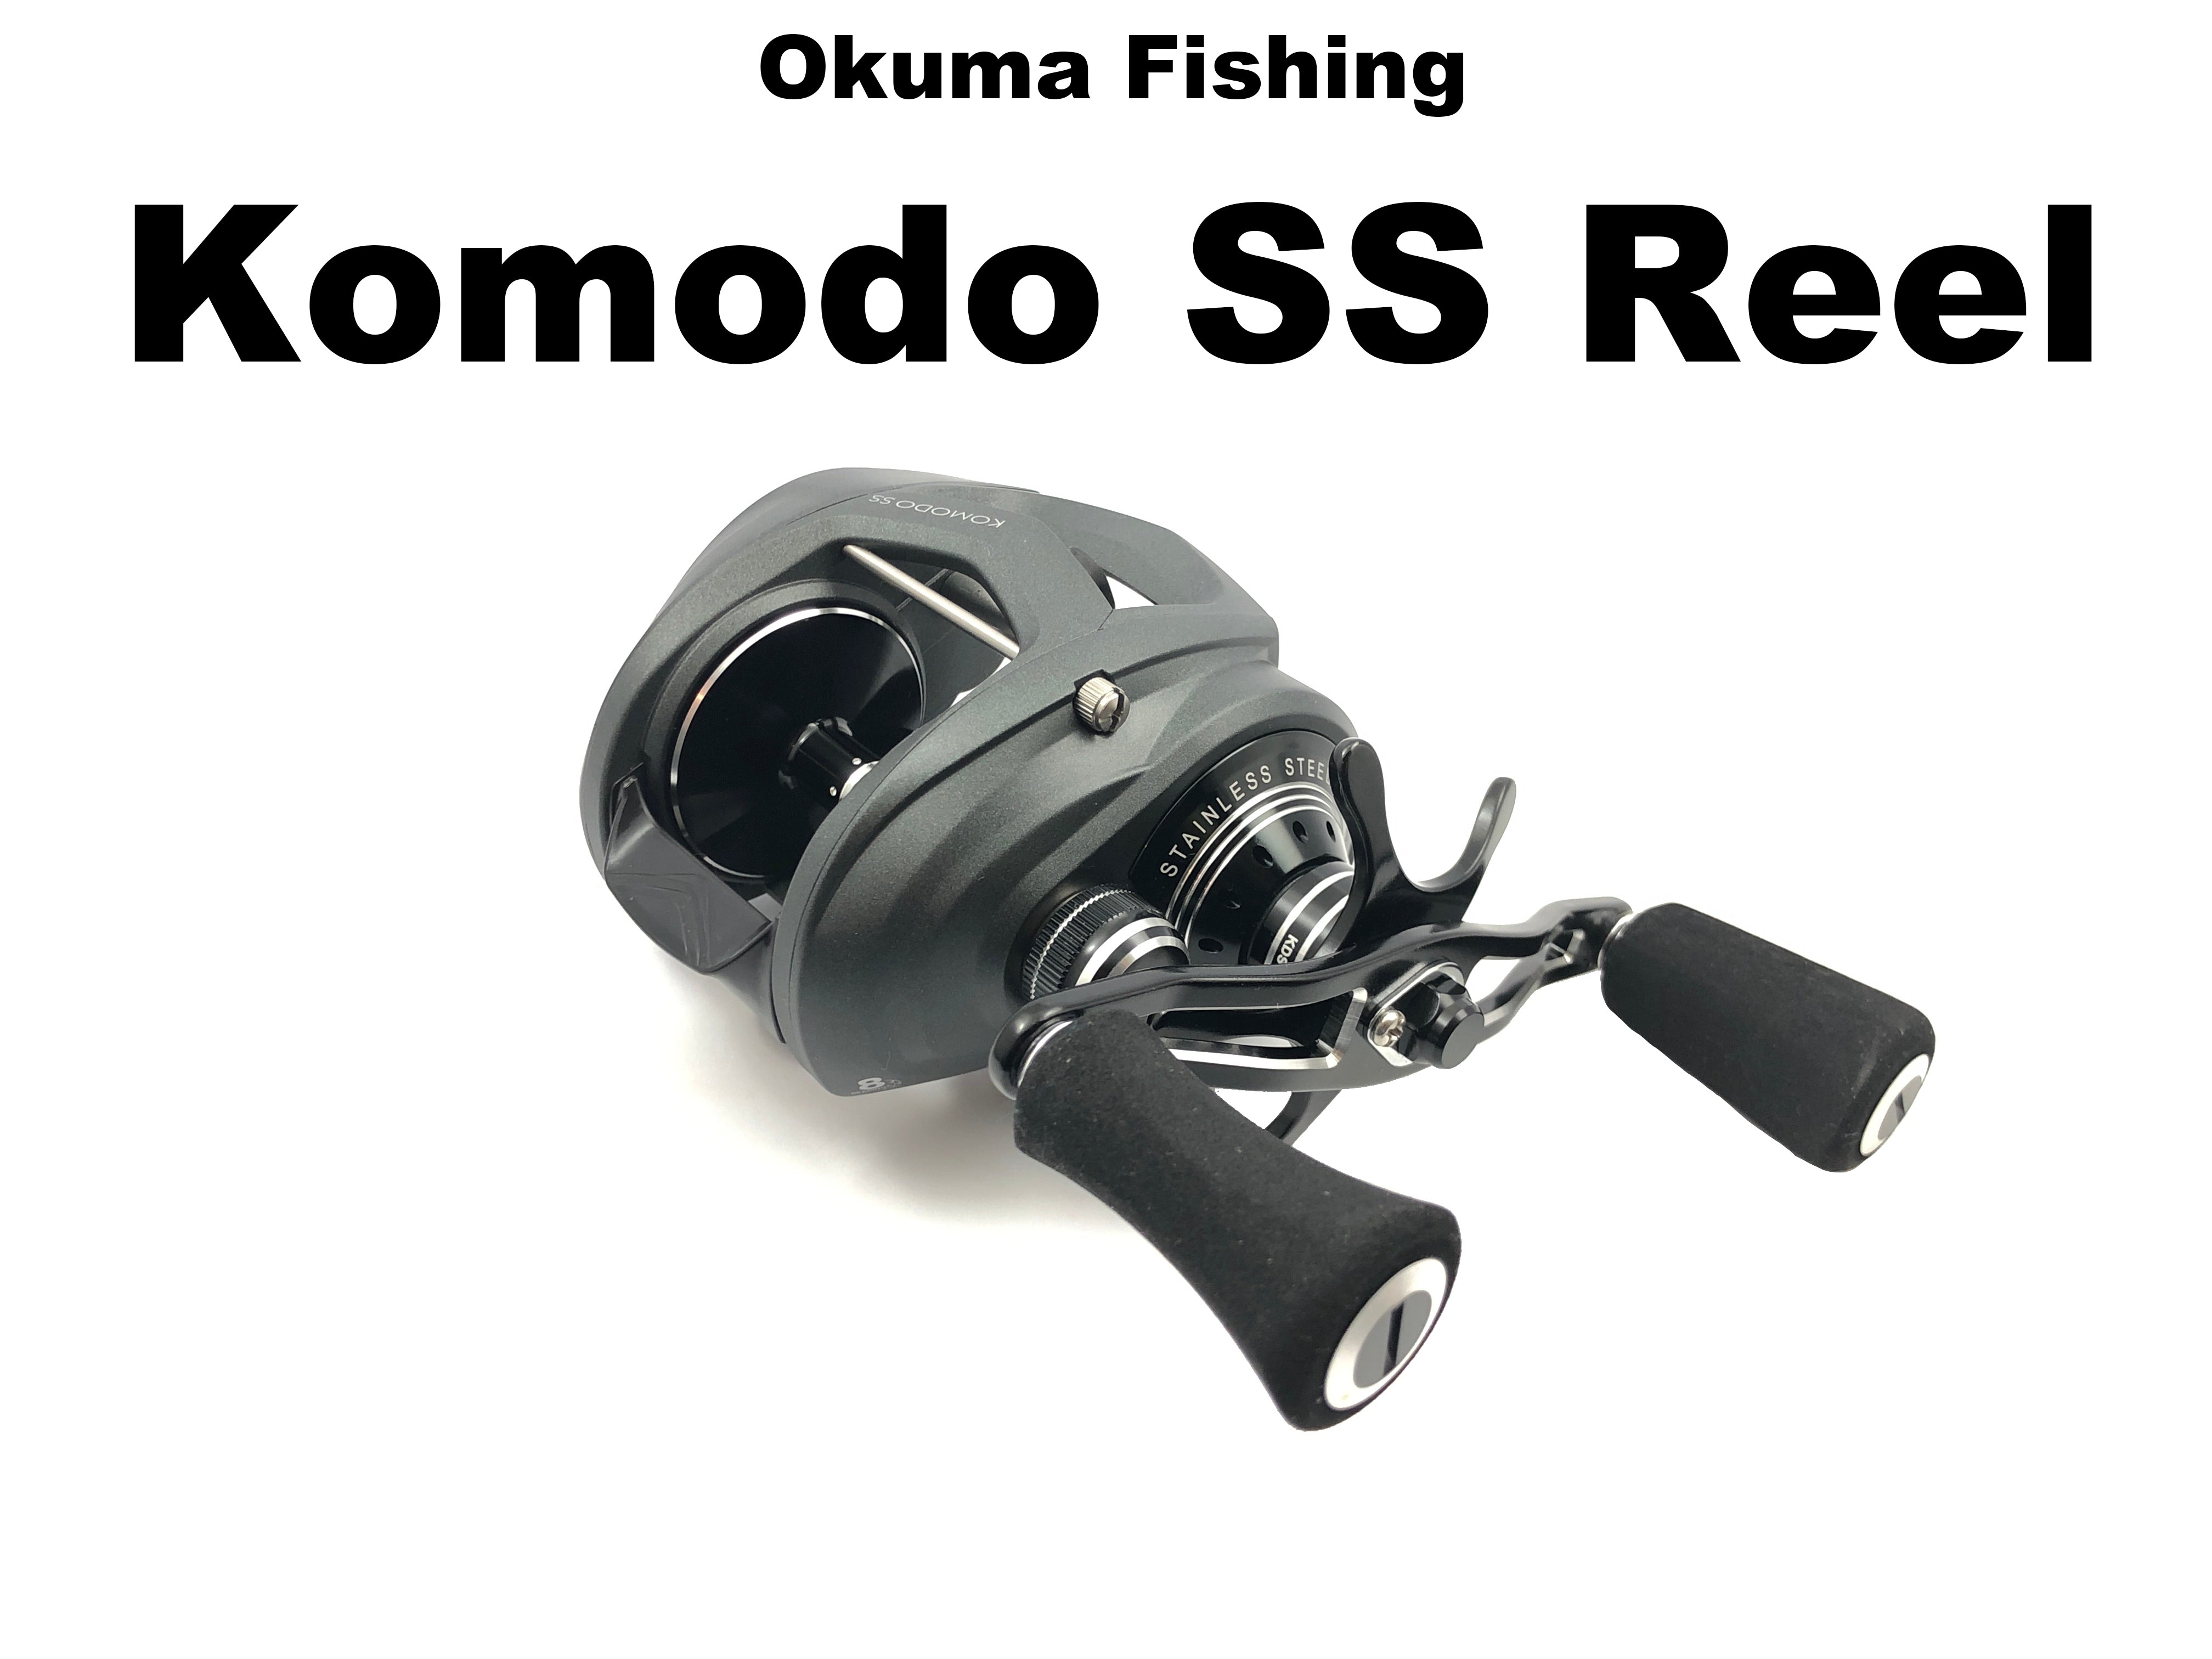  Okuma Fishing Reels